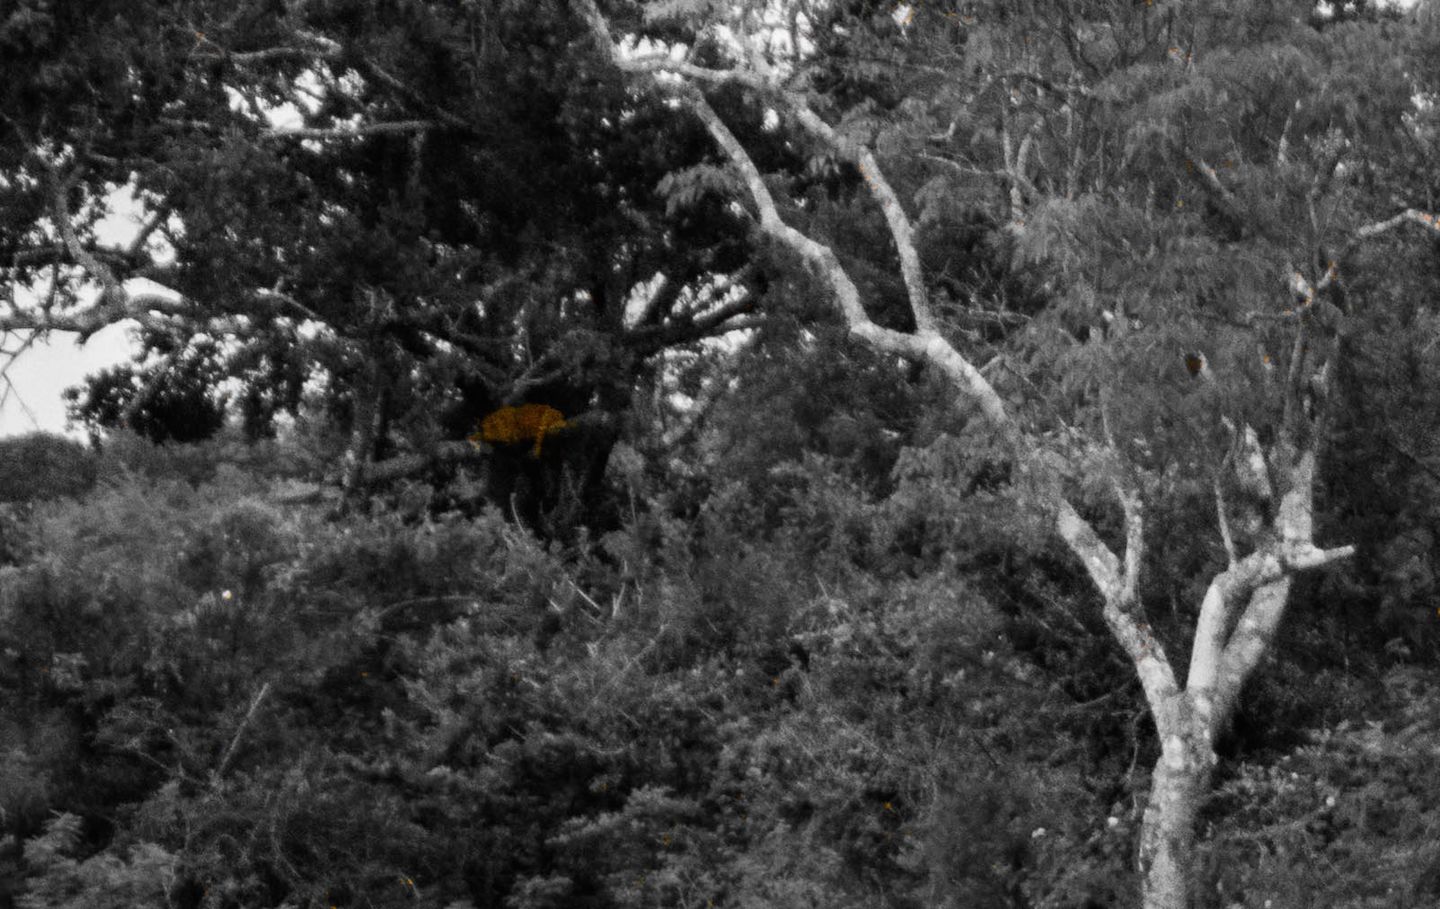 Leopard hidden in the trees, Yala National Park, Sri Lanka